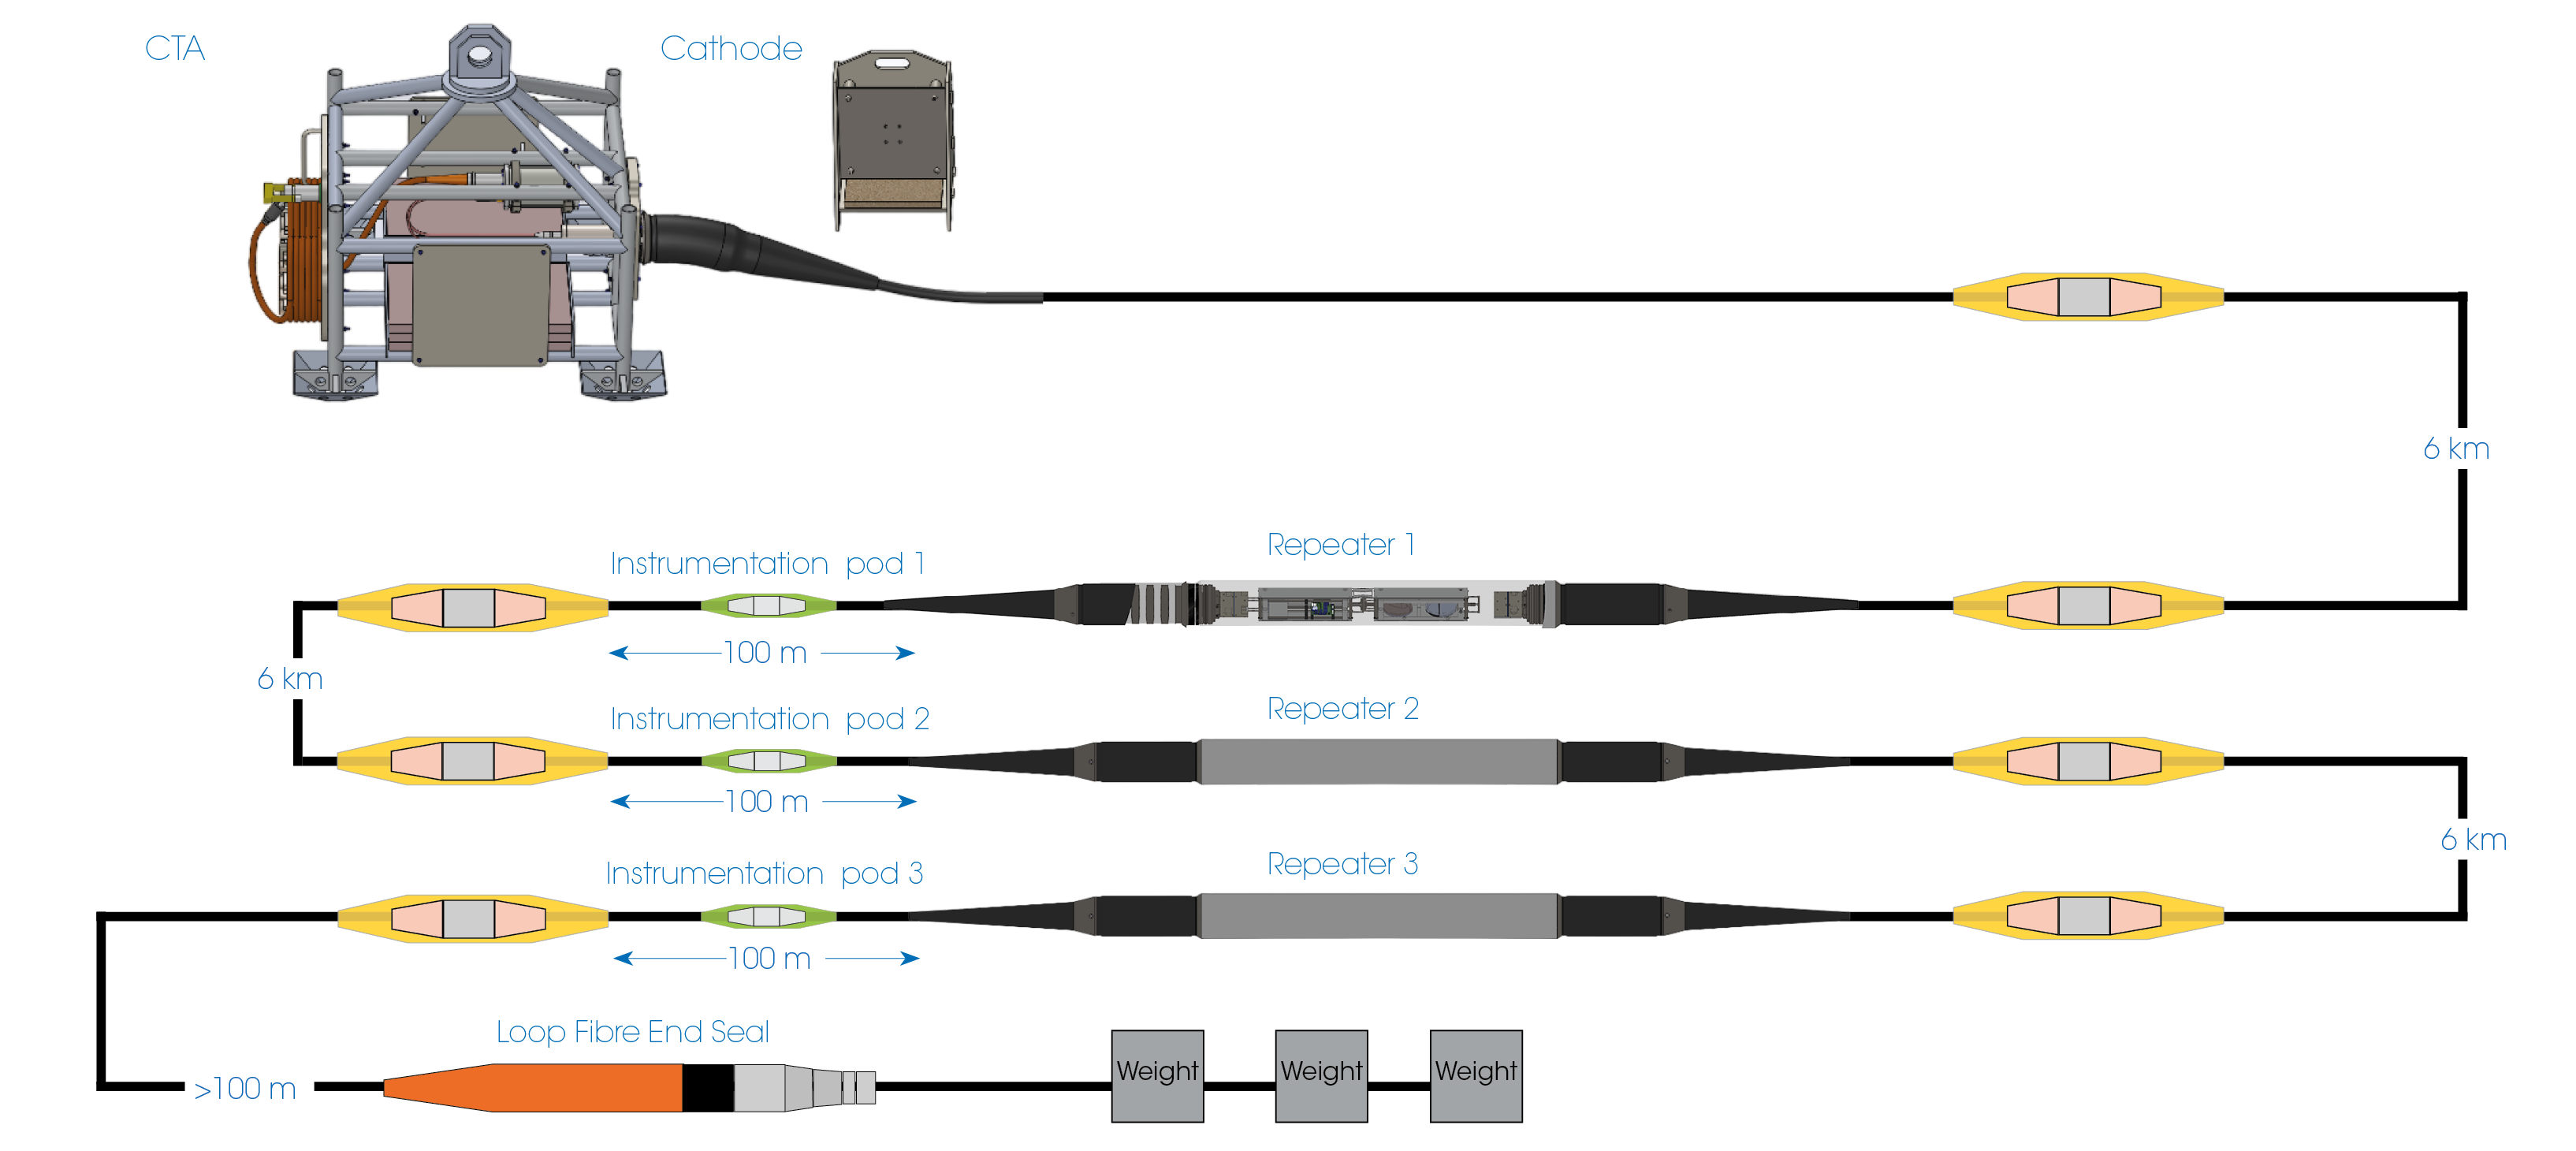 IFigure 3. InSEA SMART cable system design